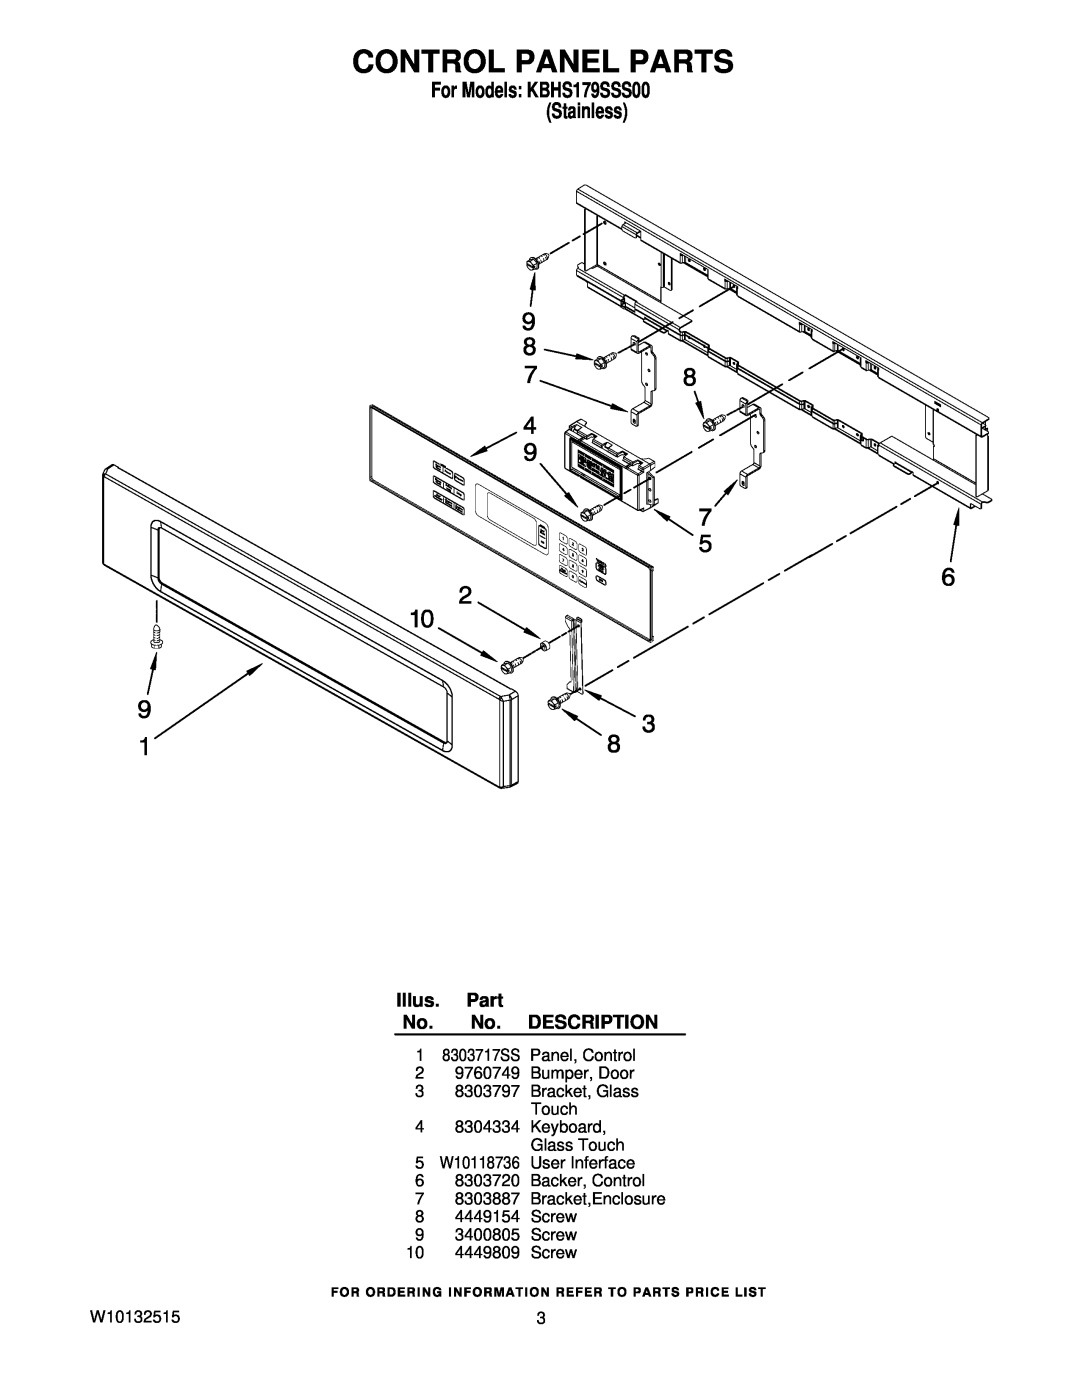 KitchenAid KBHS179SSS00 manual Control Panel Parts, Illus. Part No. No. DESCRIPTION, 10 4449809 Screw, W10132515 